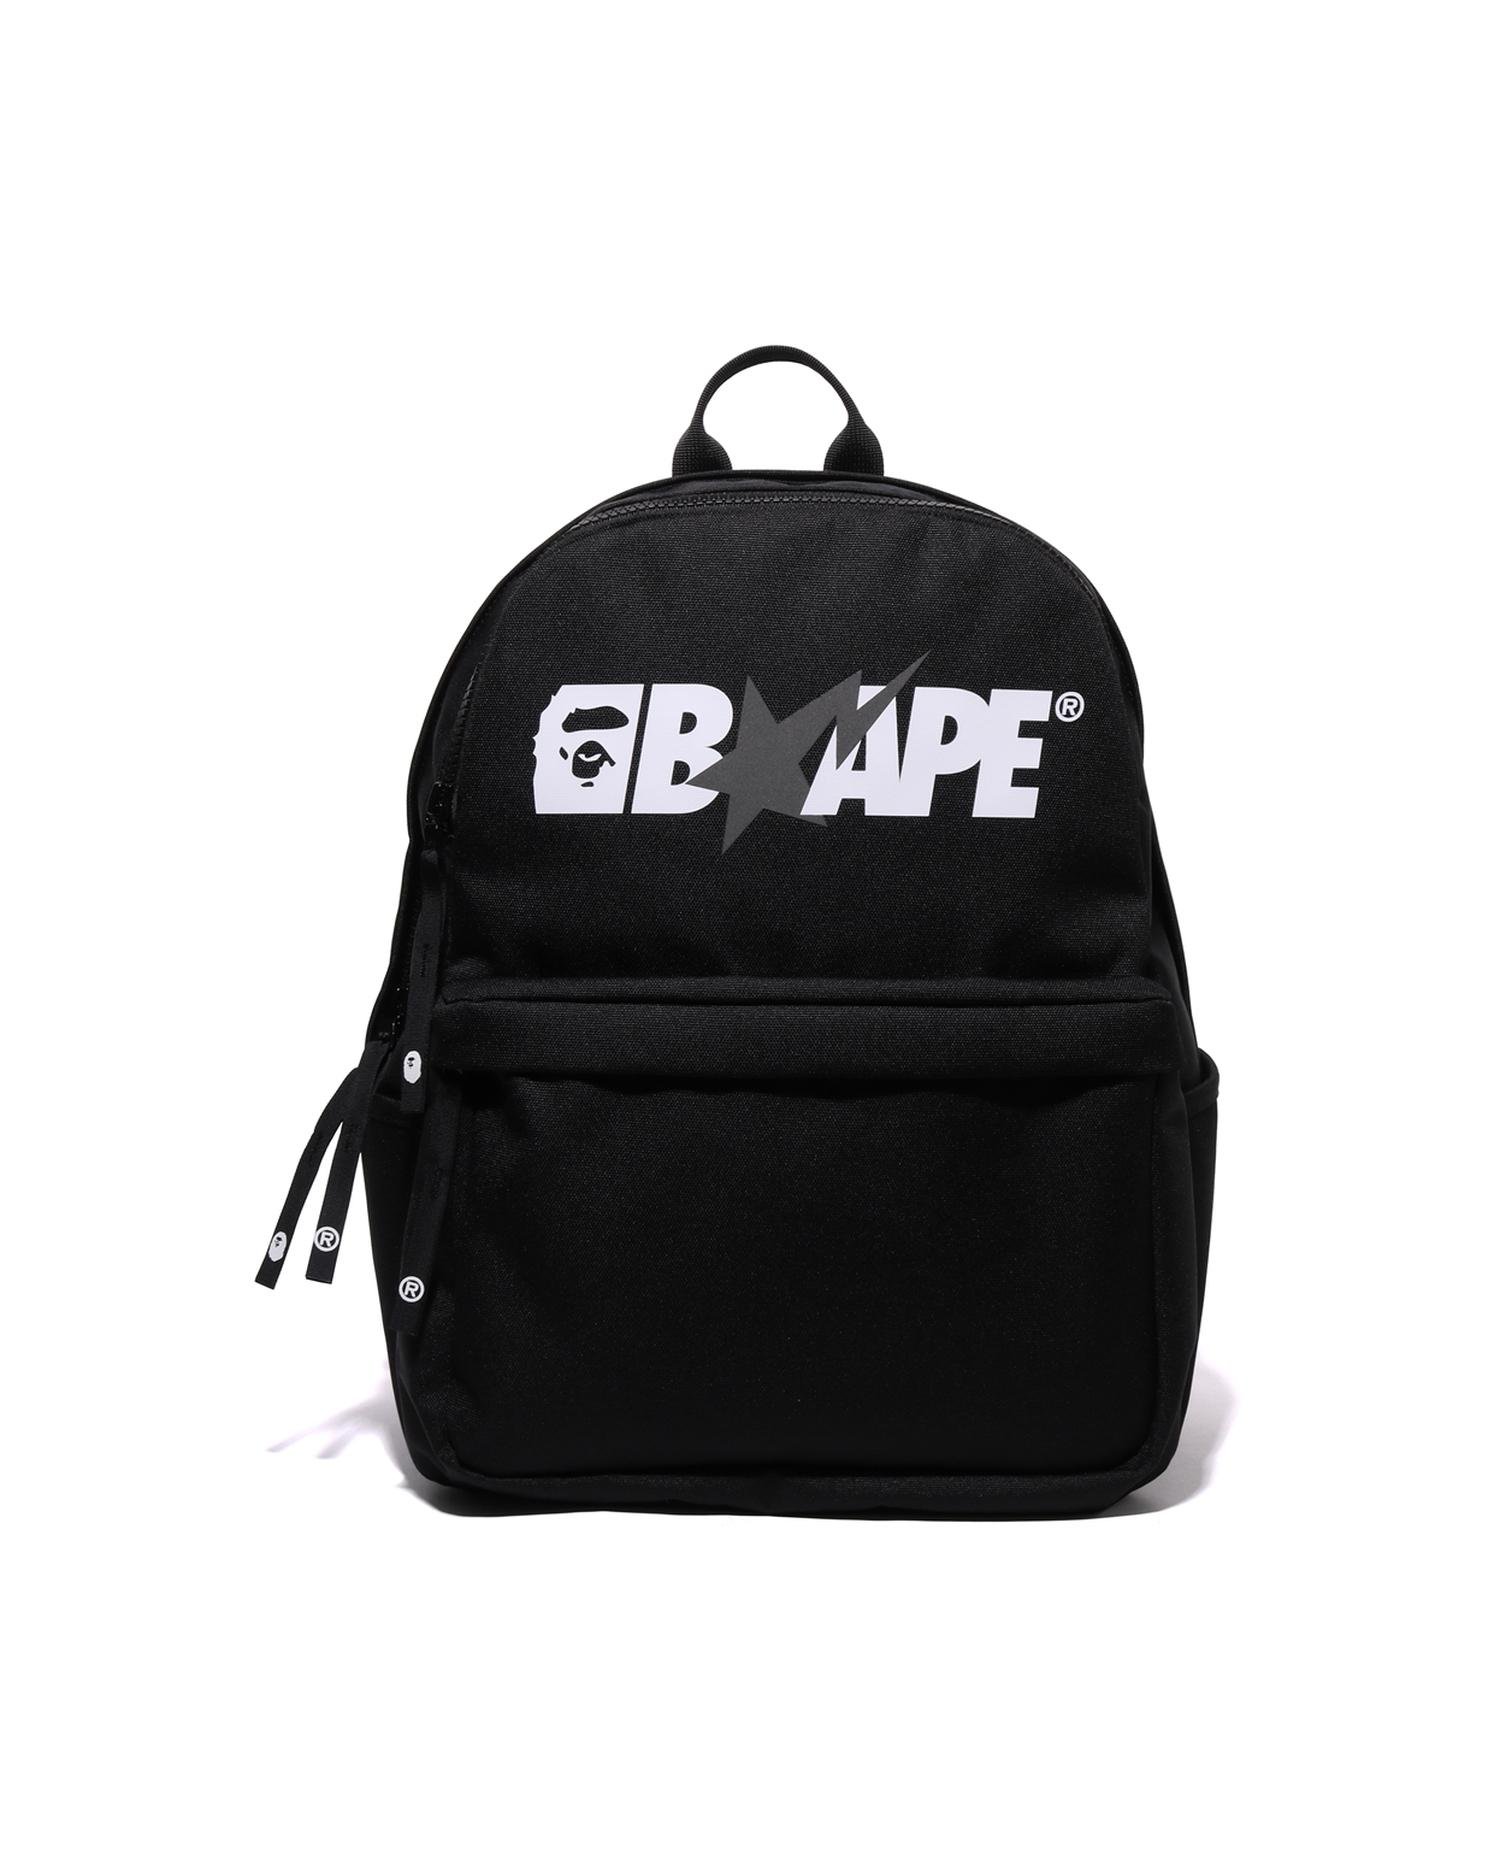 Kids BAPE Daypack by BAPE